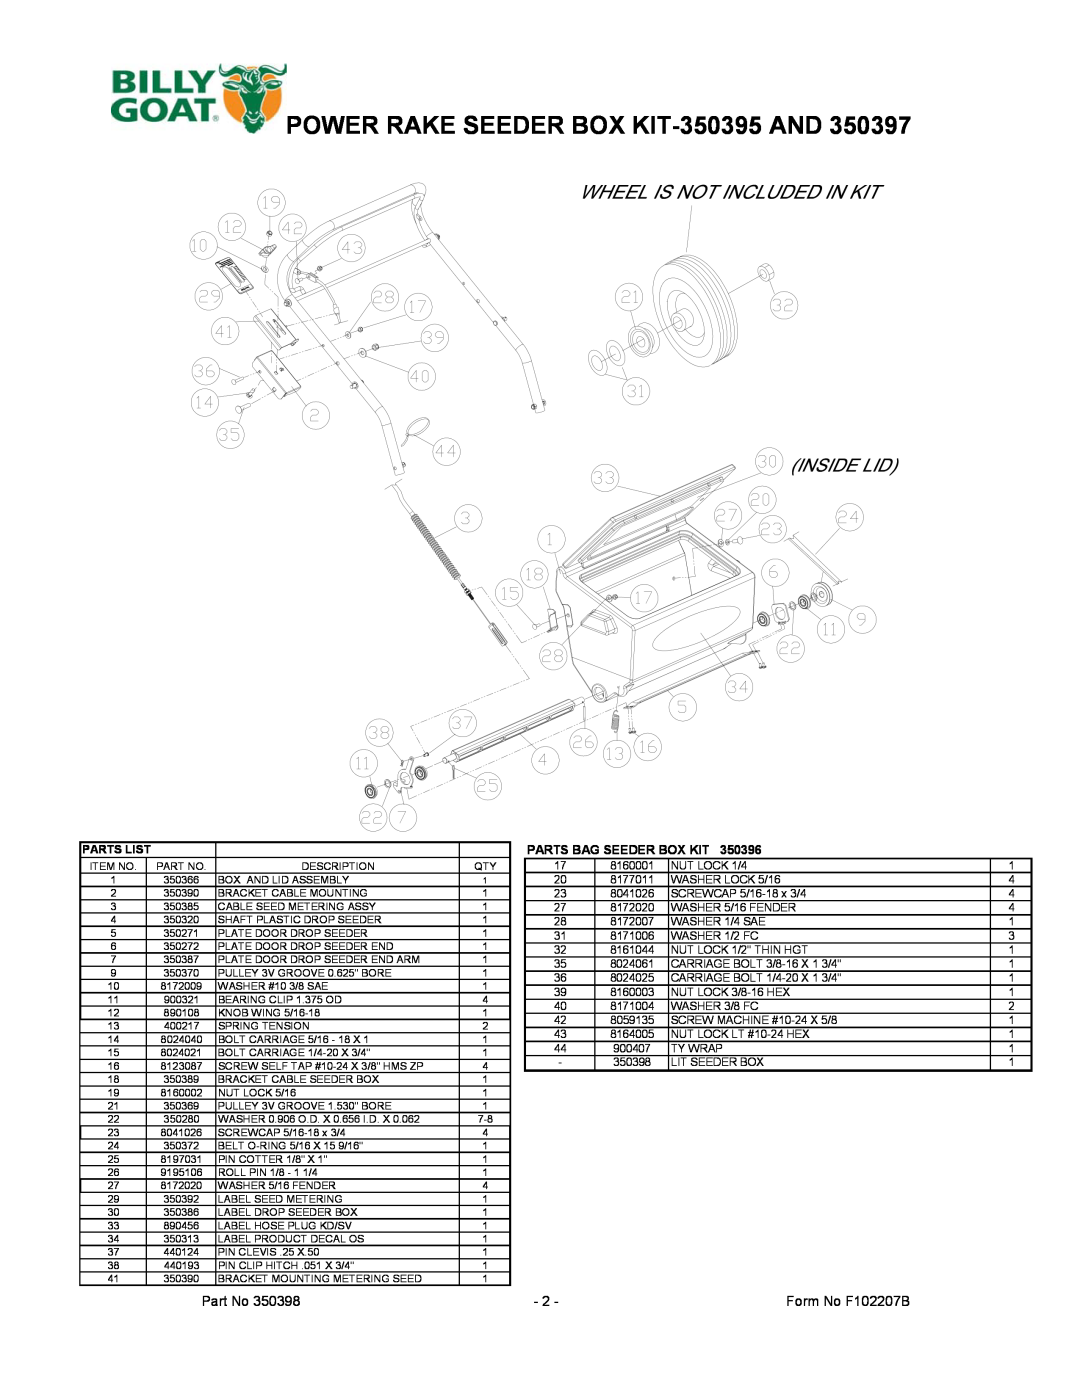 Billy Goat 350397 manual POWER RAKE SEEDER BOX KIT-350395AND, Form No F102207B, Parts Bag Seeder Box Kit, Parts List 